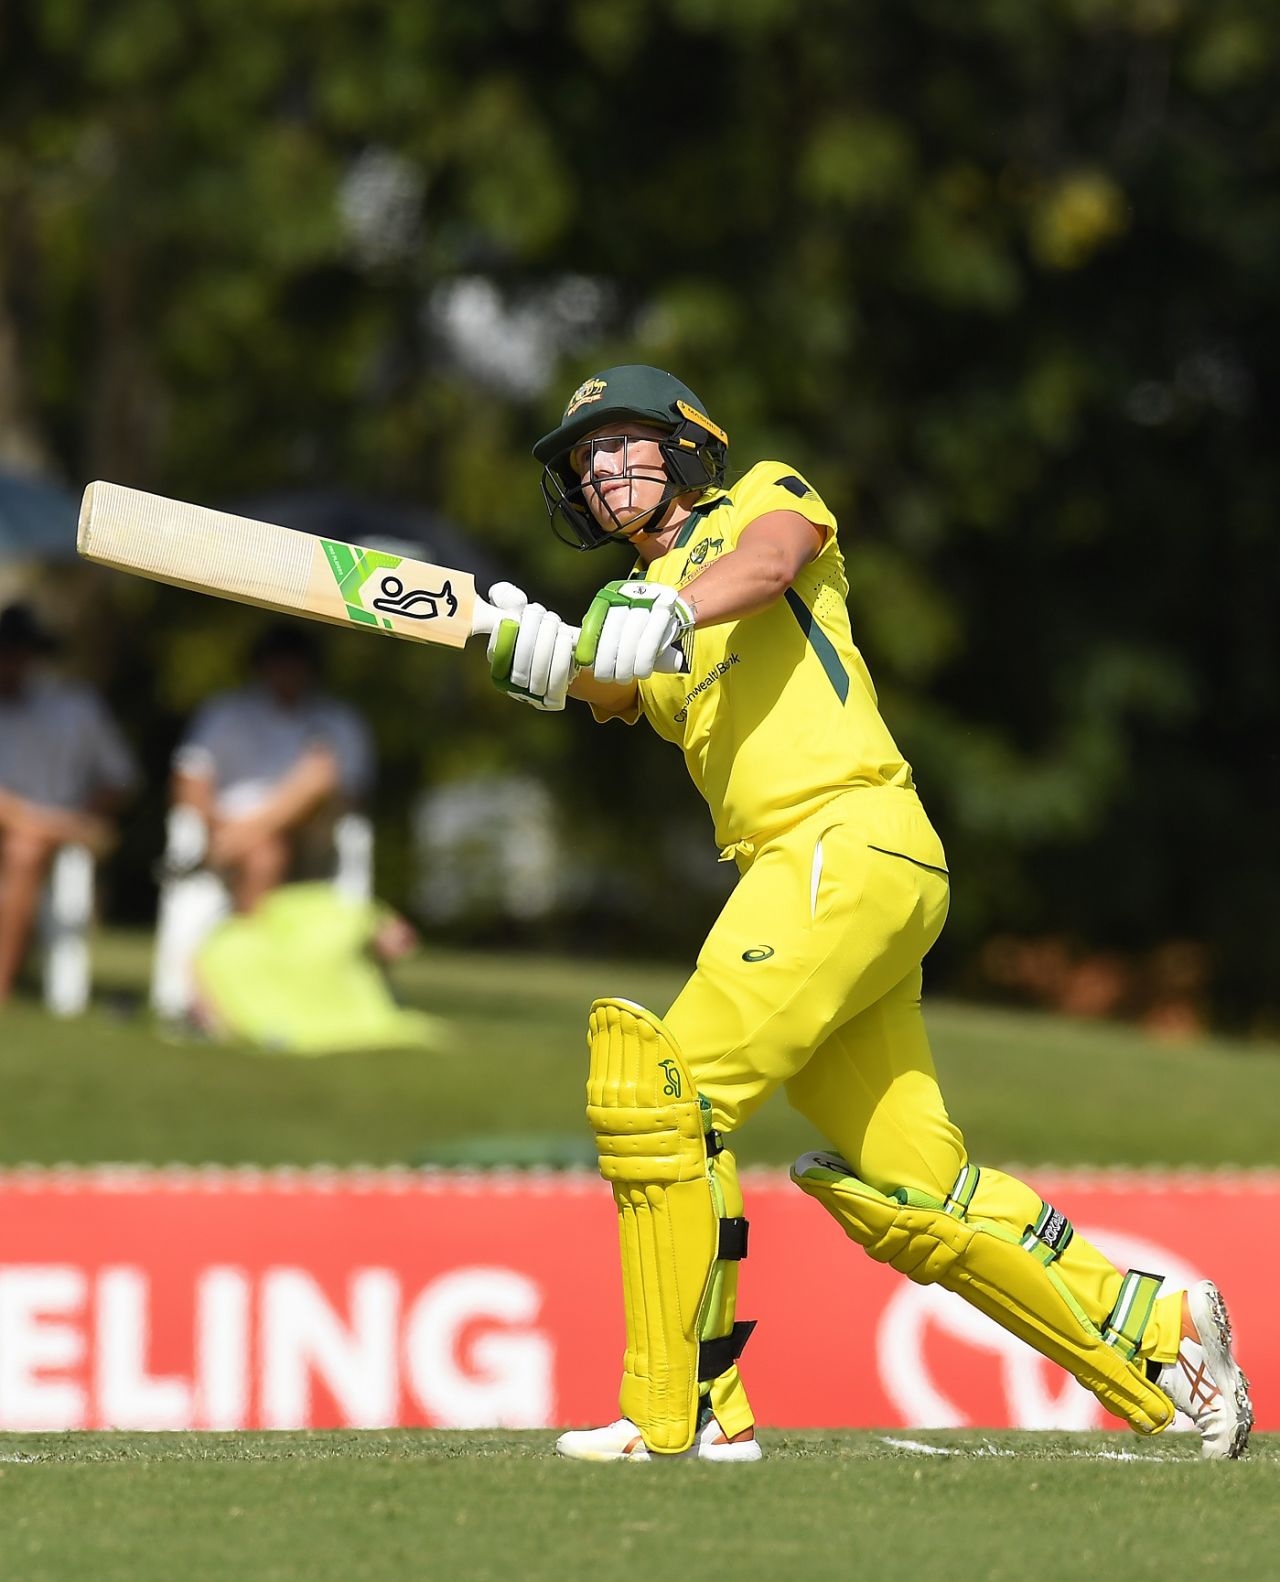 Alyssa Healy deposits a full toss over the midwicket rope, Australia vs India, 1st Women's ODI, Mackay, September 21, 2021